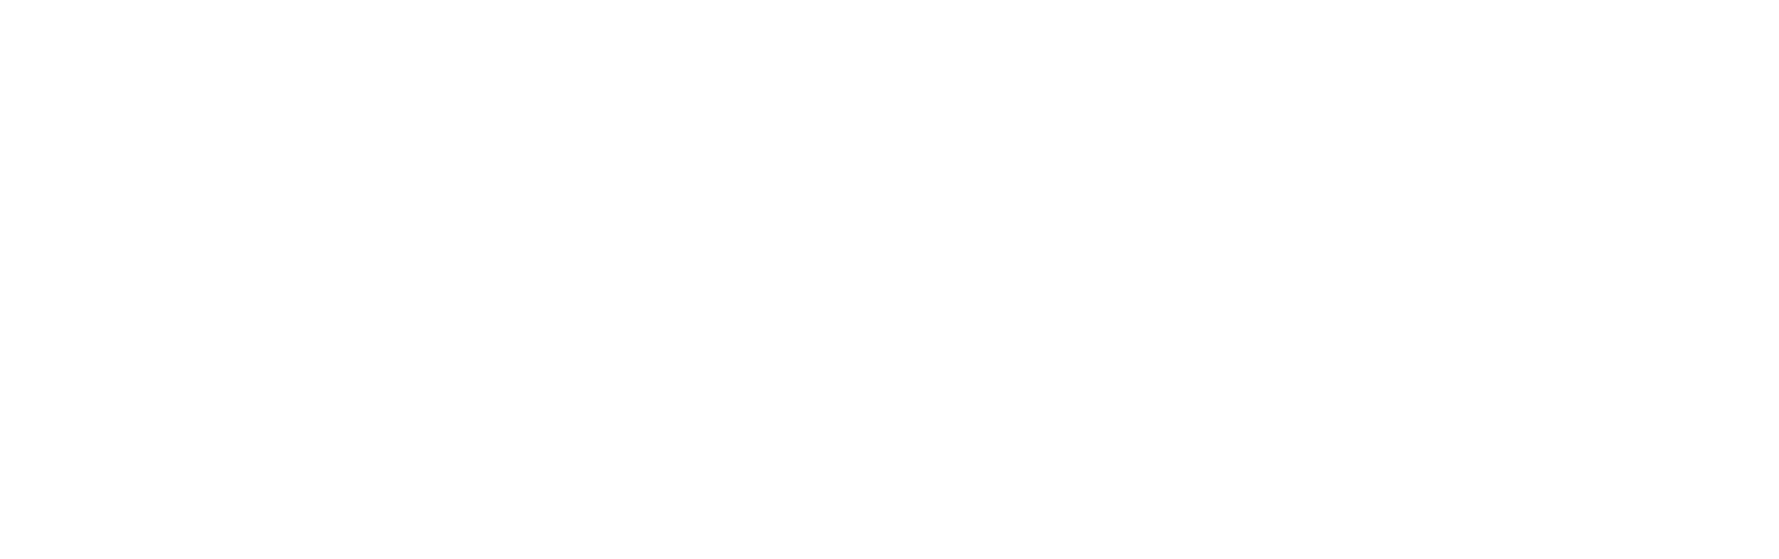 American White Logo - American Heart Association